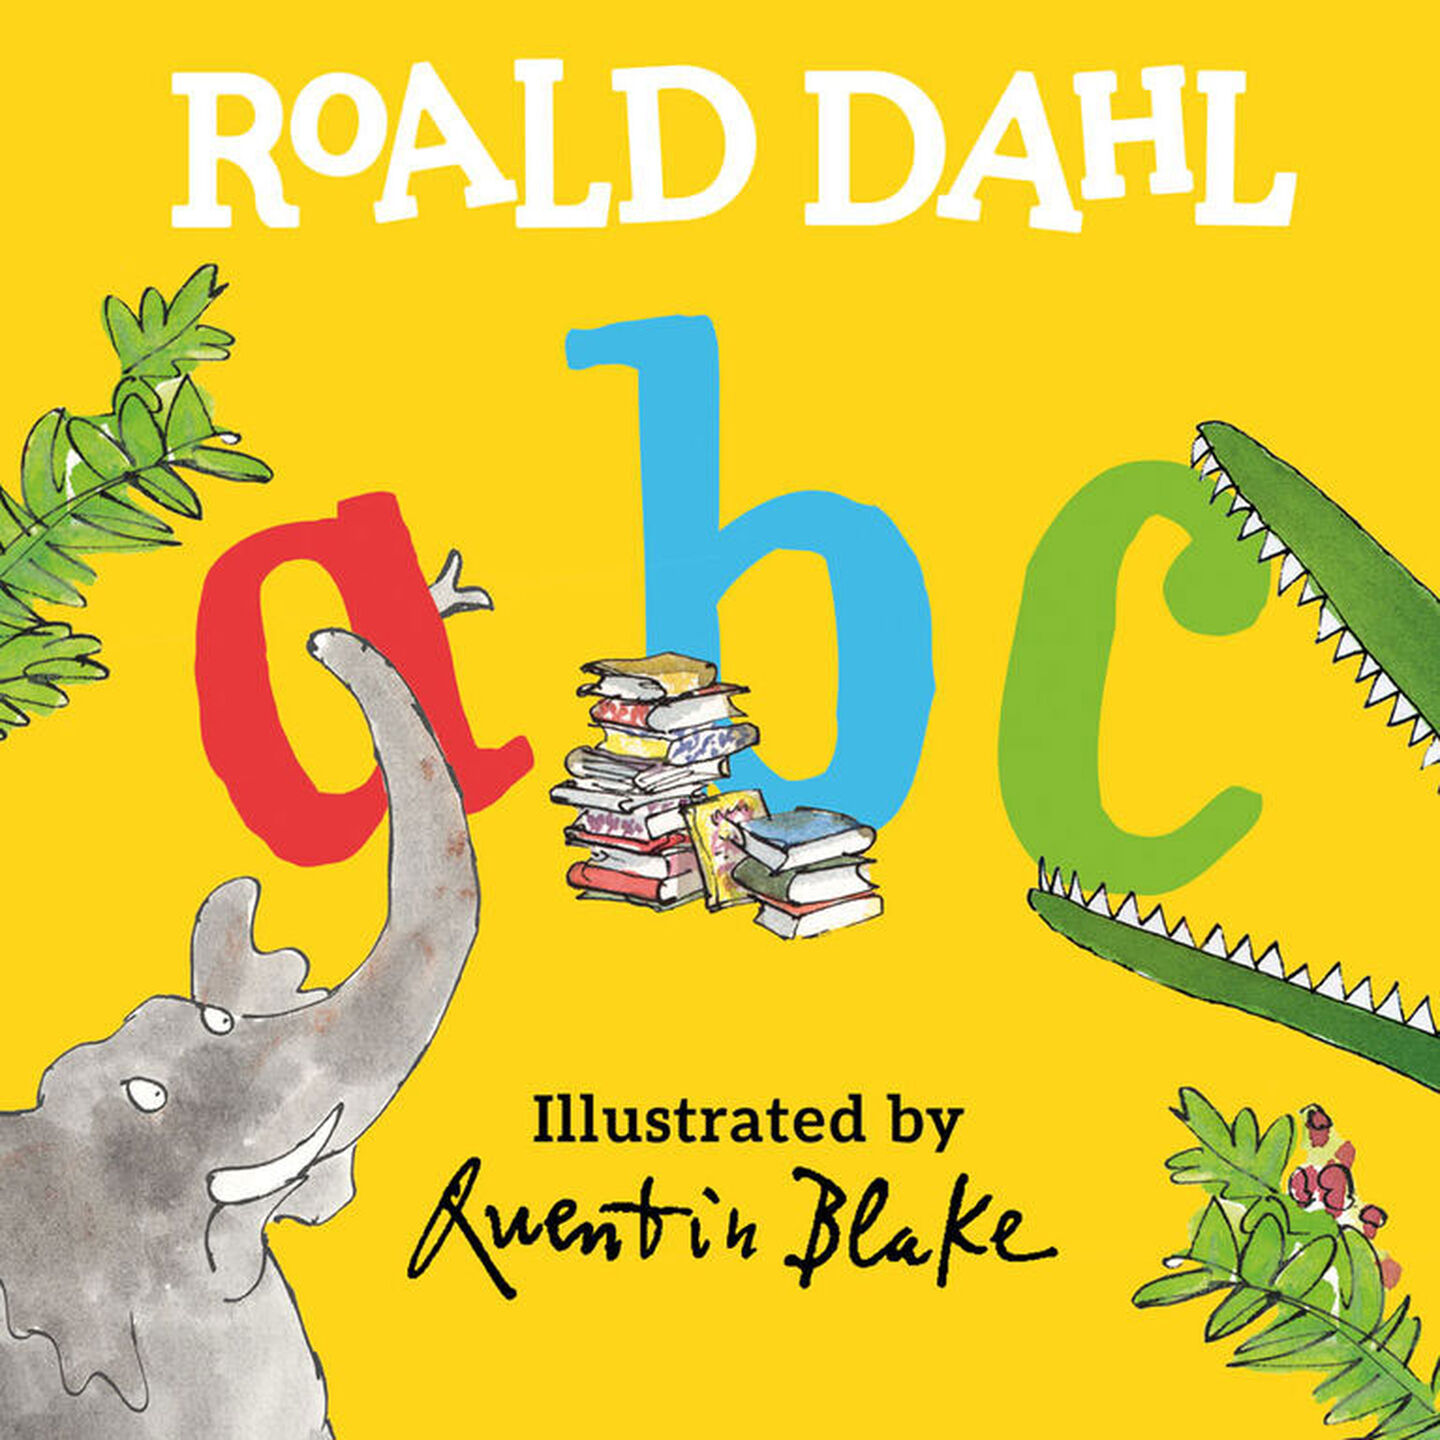 Roald Dahl's ABC